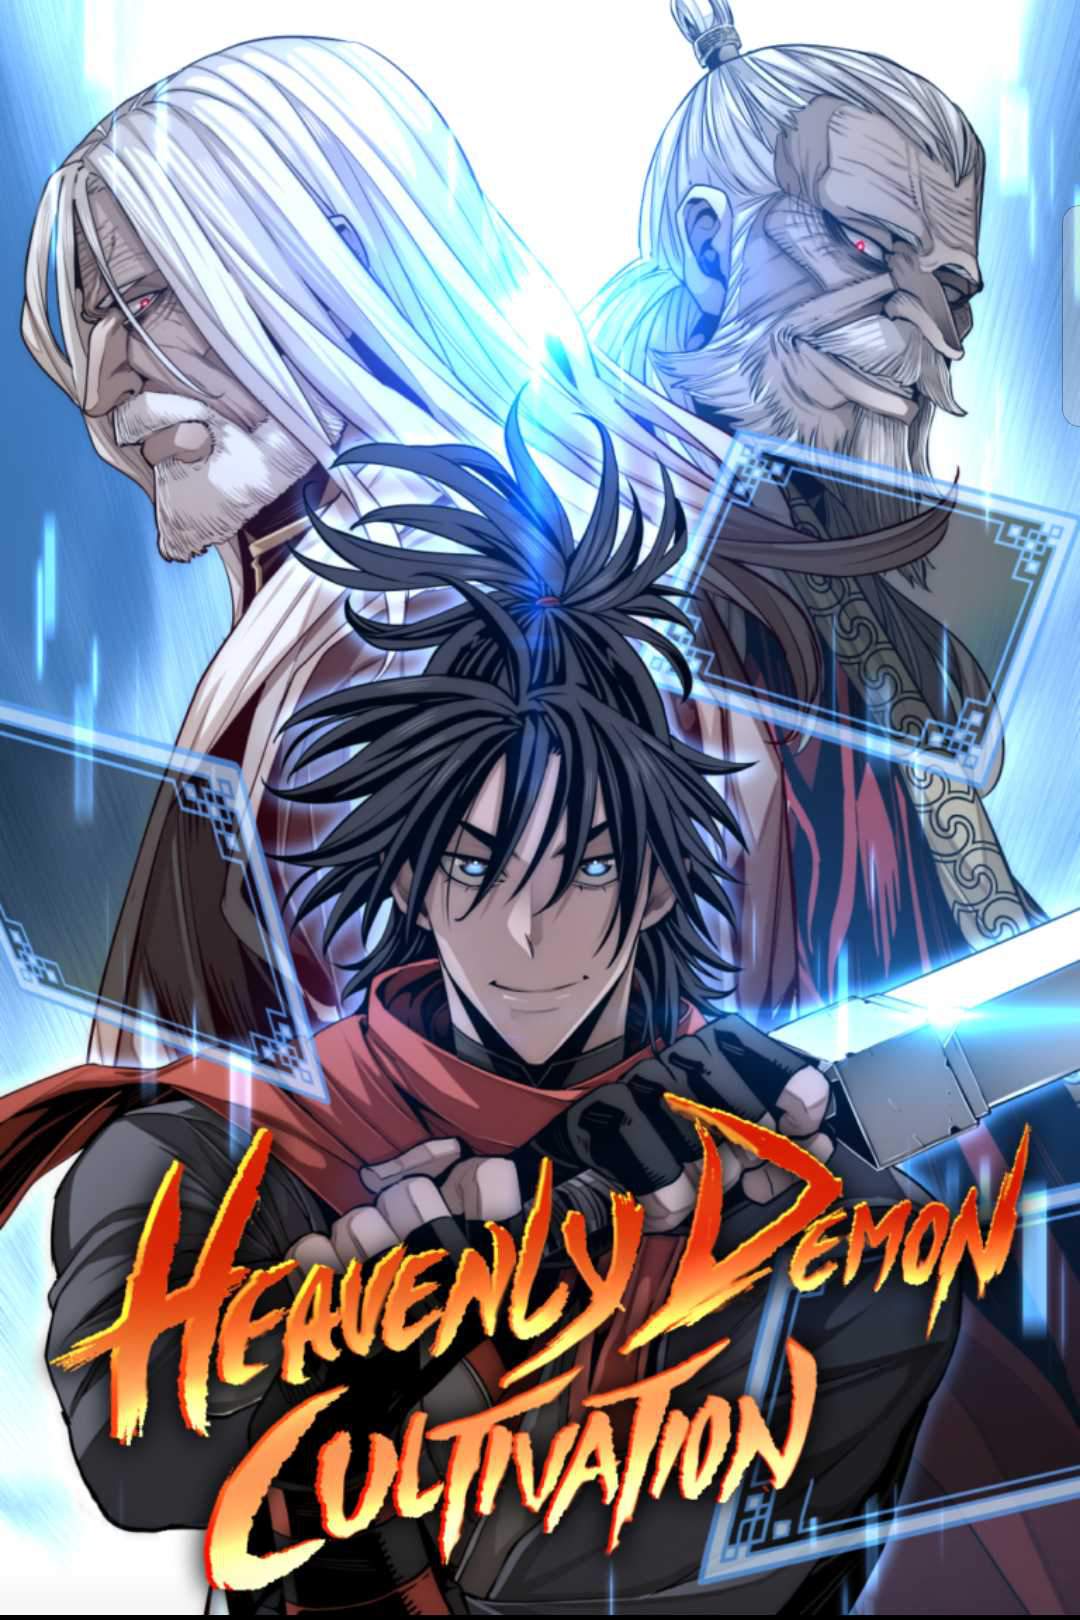 heavenly-demon-cultivation-simulation-001